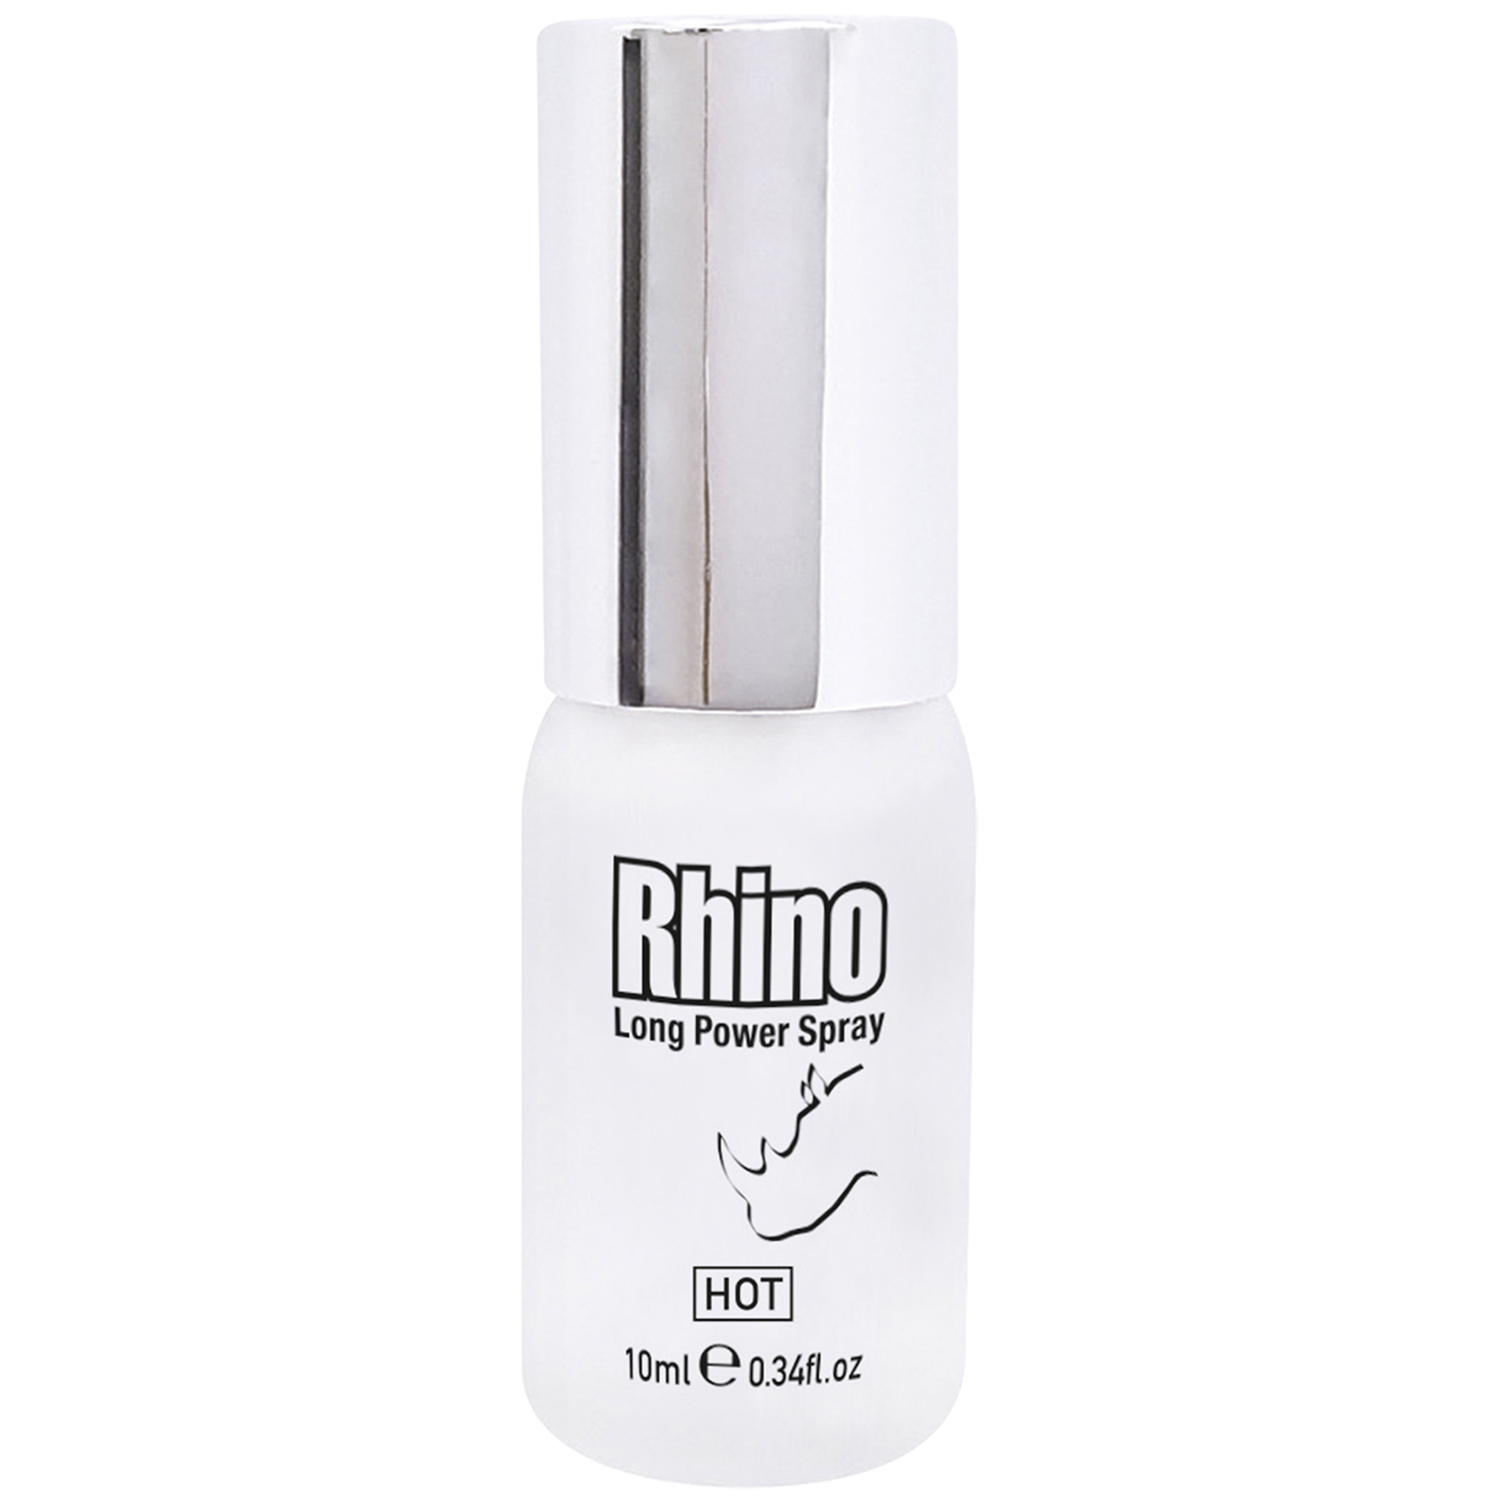 Hot Rhino Spray Hot Long Power Spray 10 ml - Klar